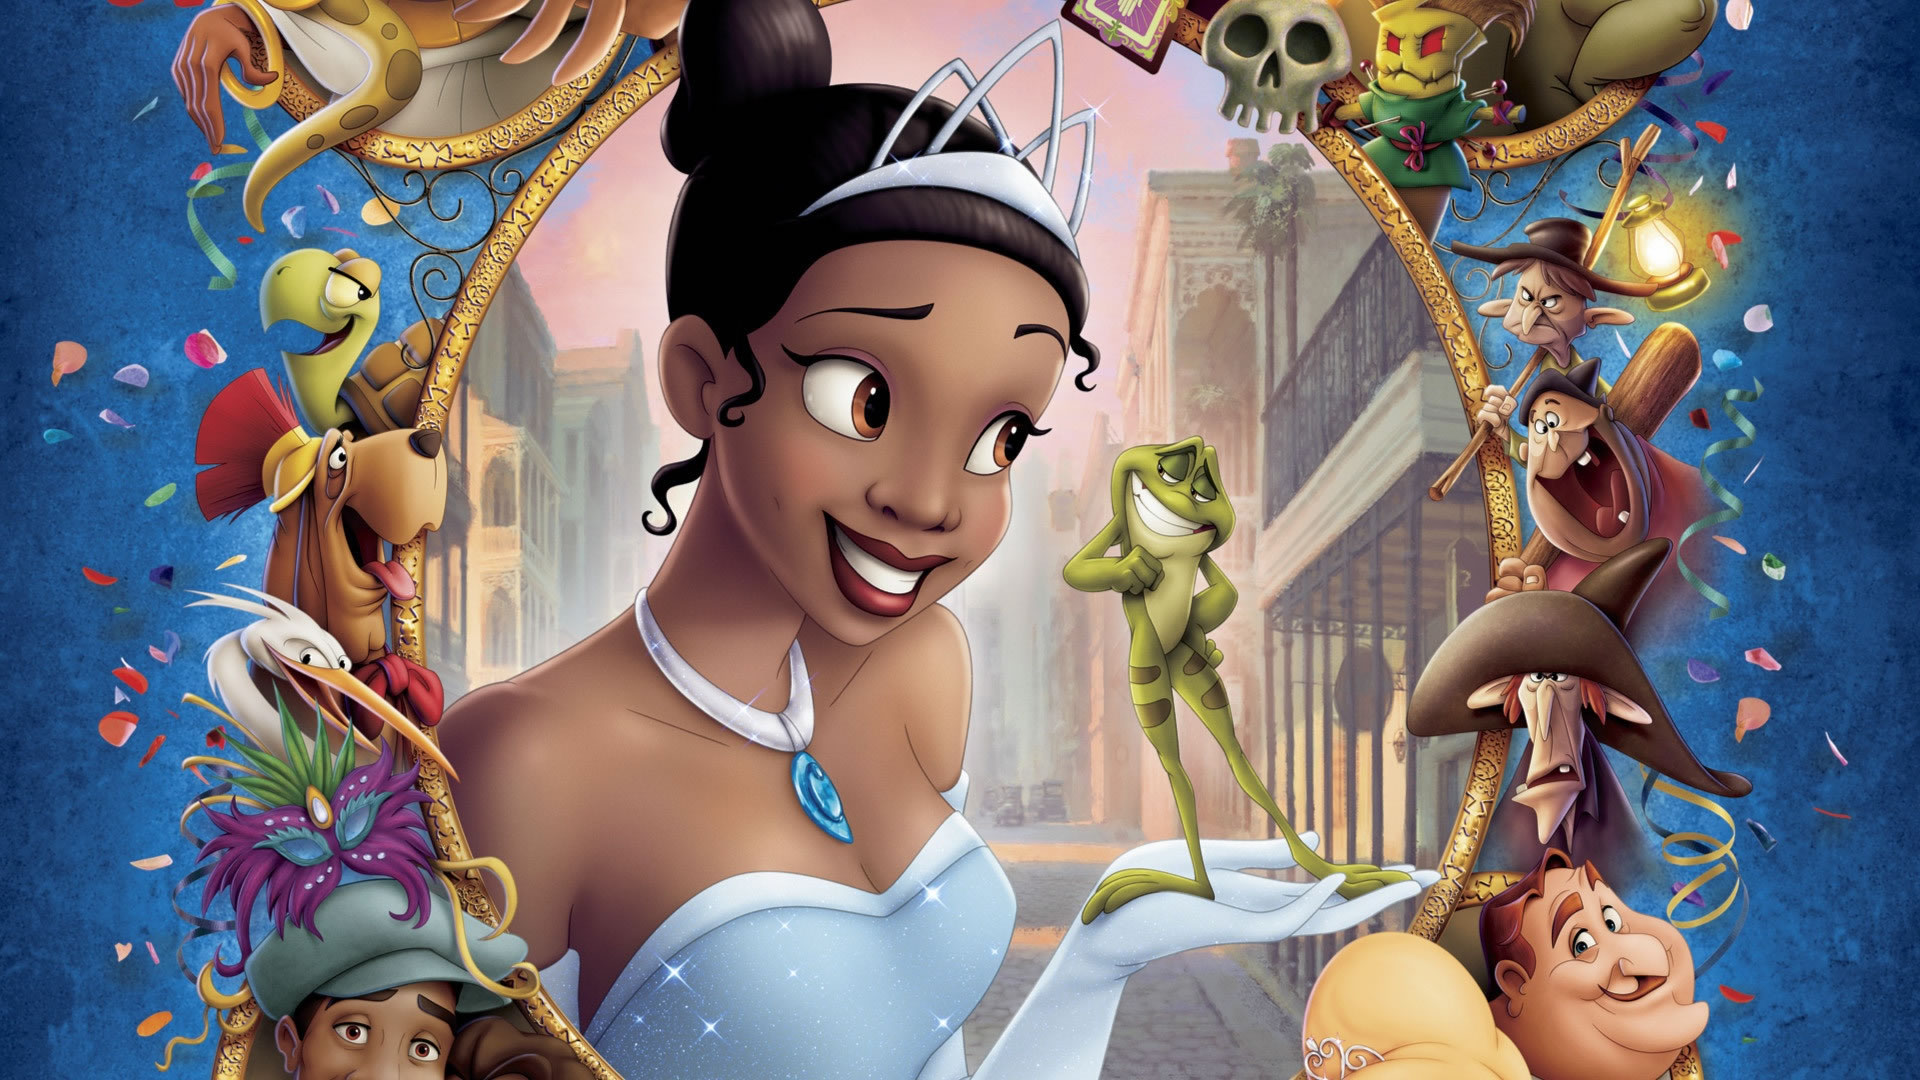 download wallpaper: Disney’s de prinses en de kikker wallpaper